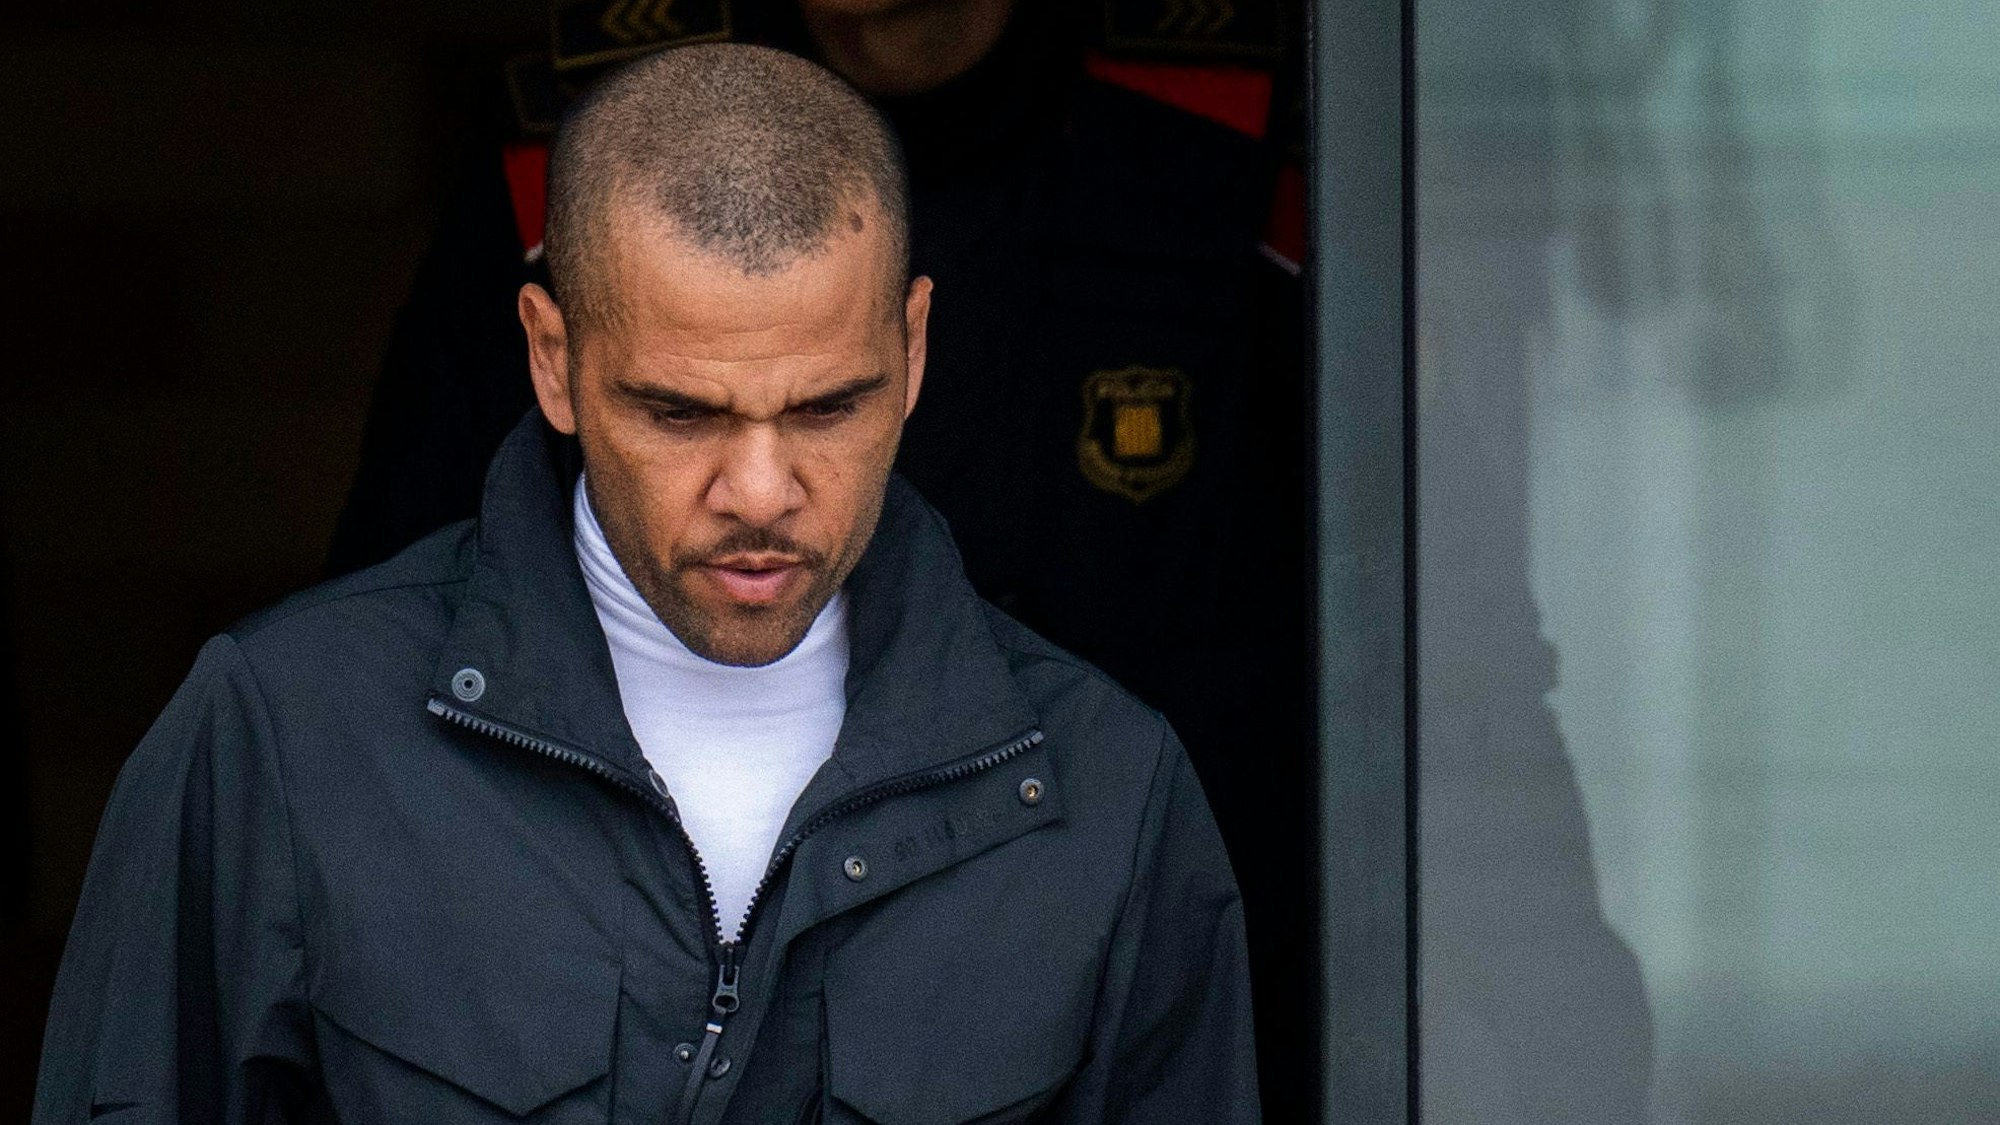 Dani Alves mit gesenktem Kopf bei Verlassen des Gefängnisses Brians 2 in Barcelona.